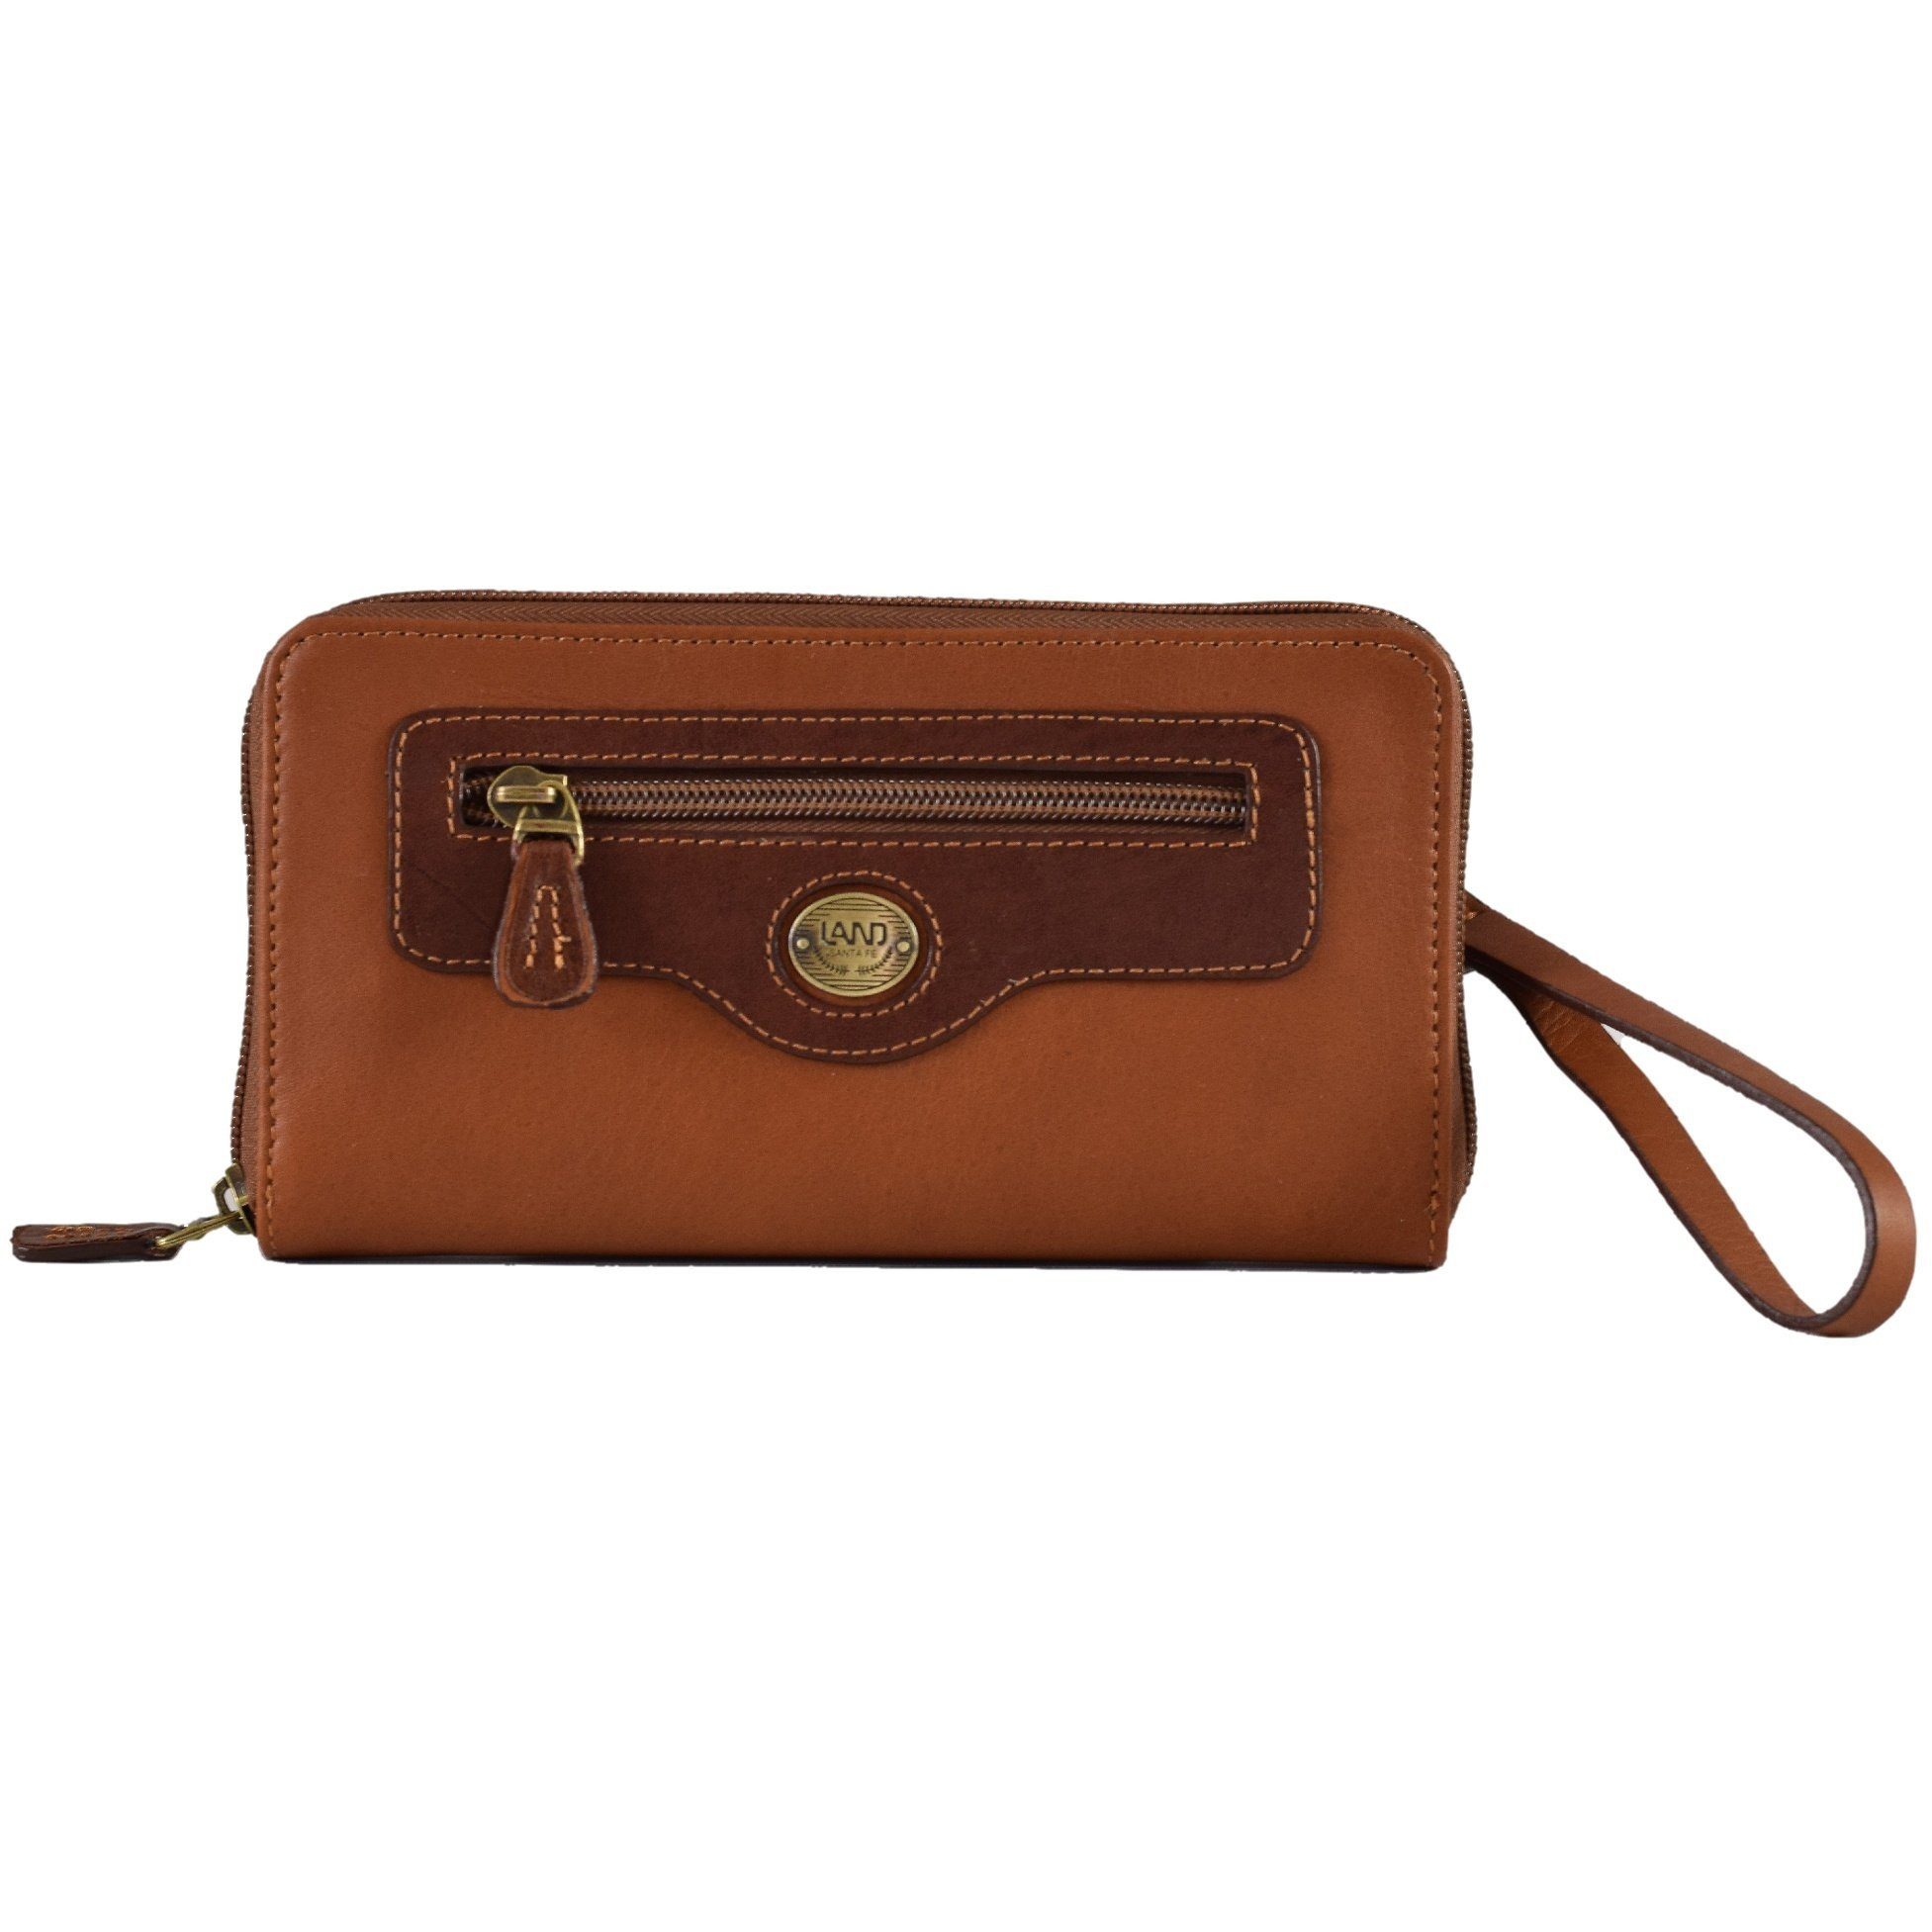 Bow Tie Wallet Wristlet | Leather clutch wallet, Money bag, Card holder  purse